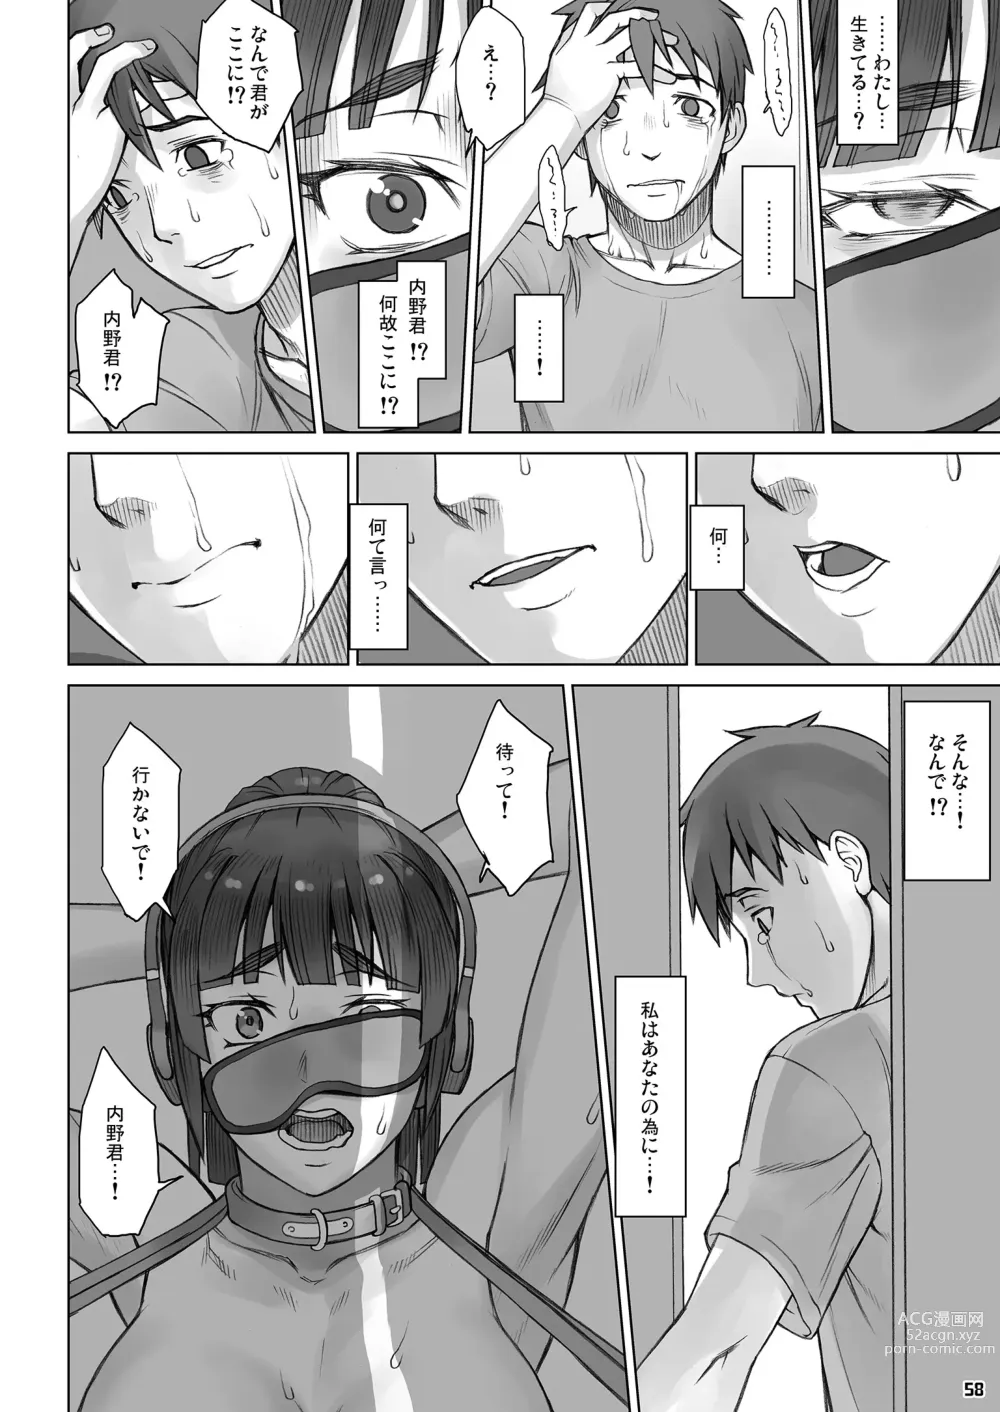 Page 57 of doujinshi Senpai Dakkan Complete+